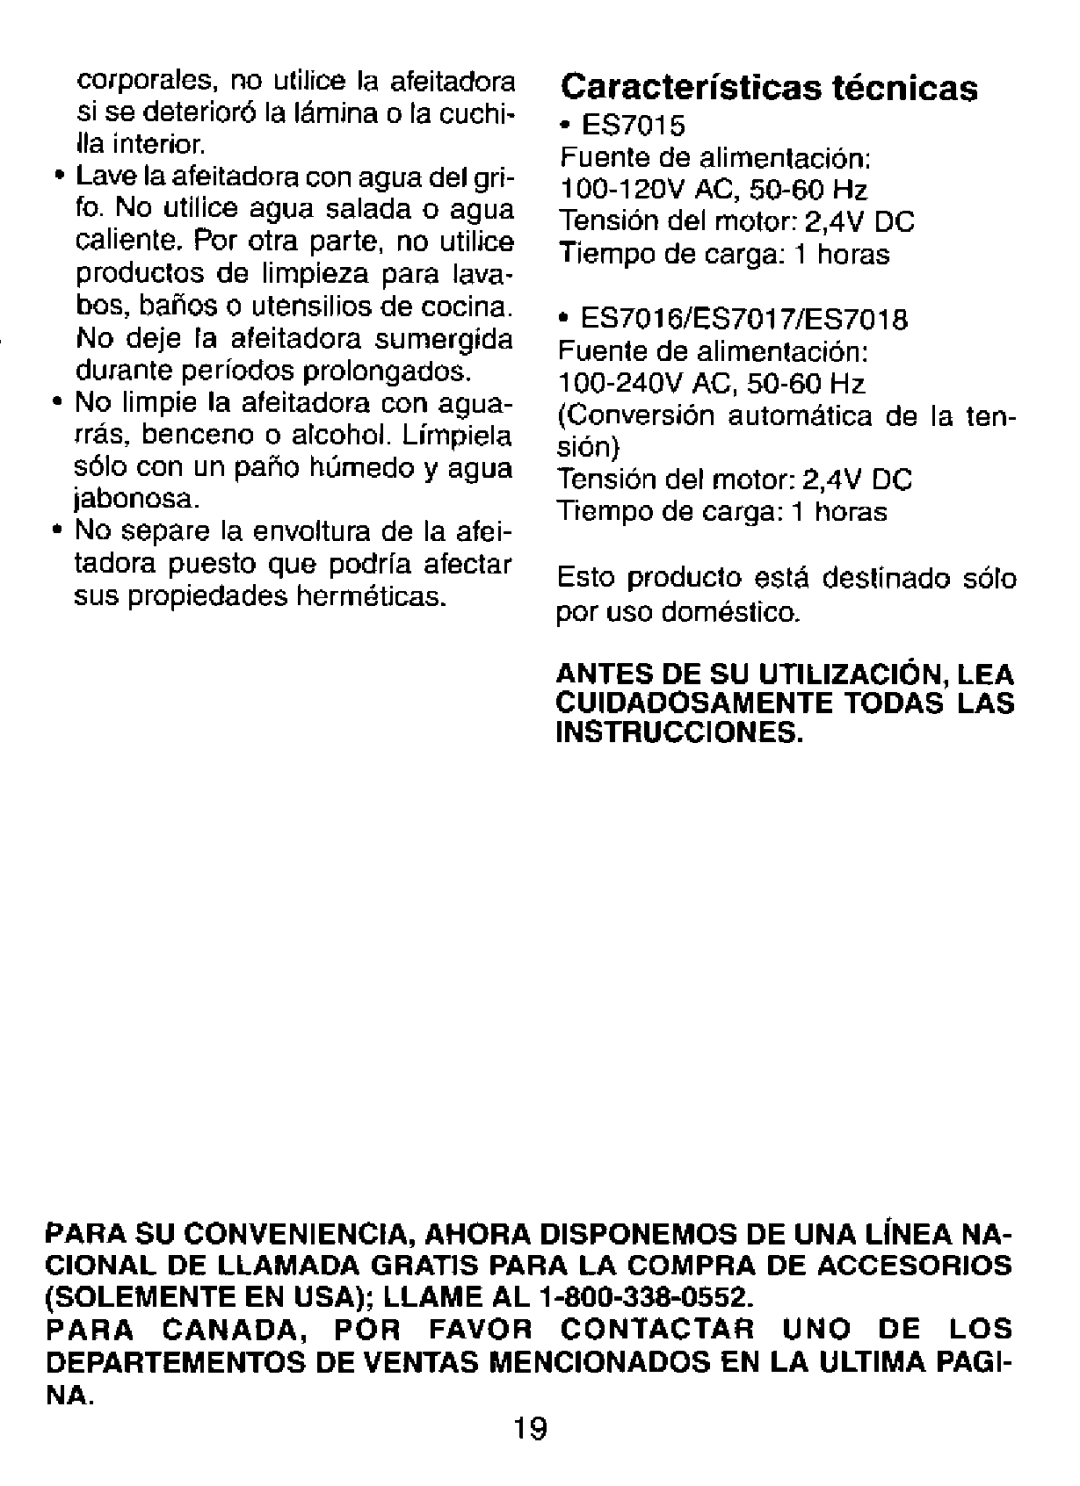 Panasonic ES7018, ES7015 manual 